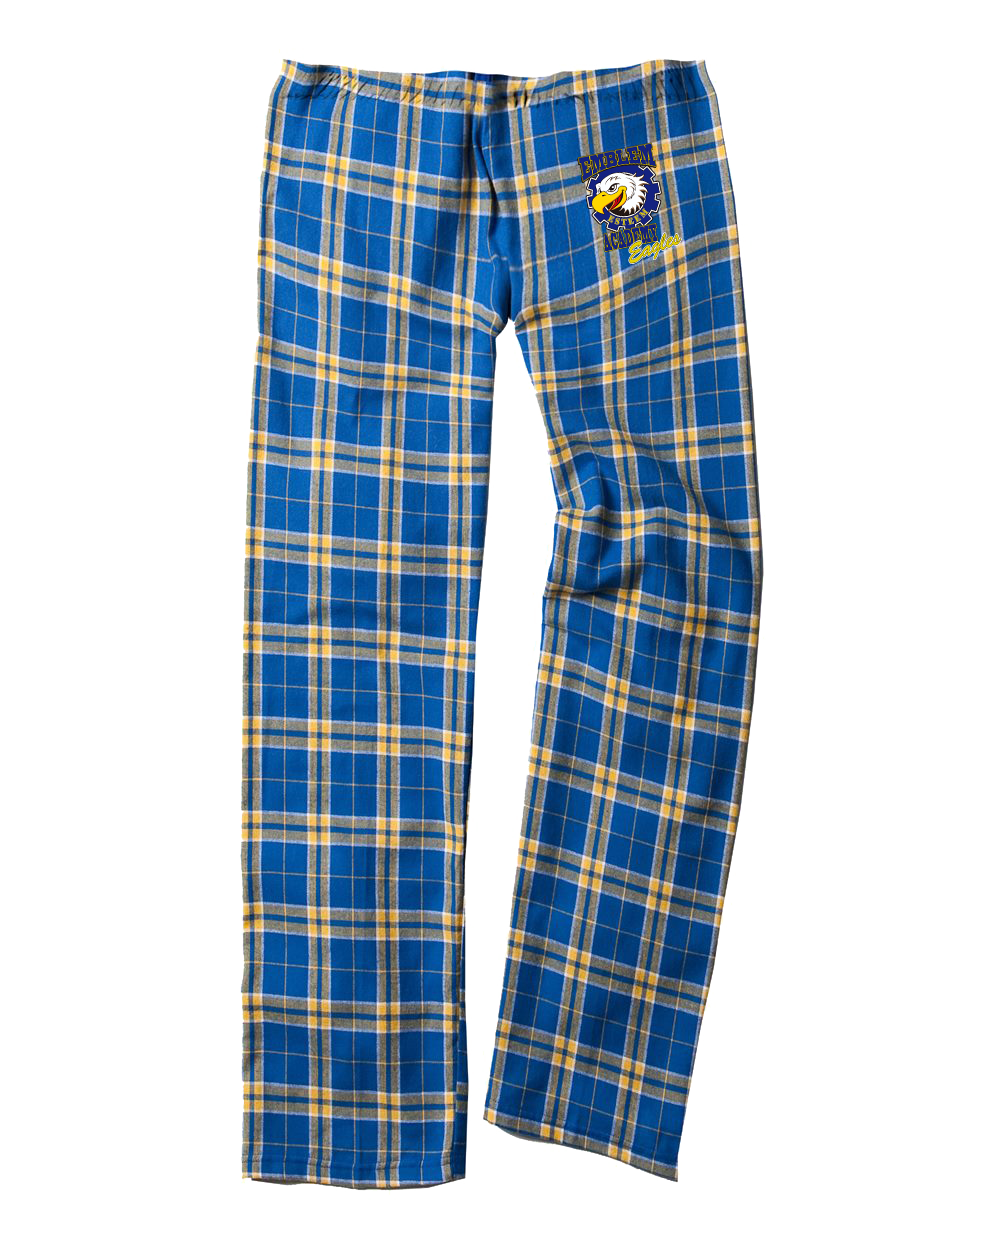 Flannel Pants - YOUTH - GLITTER LOGO